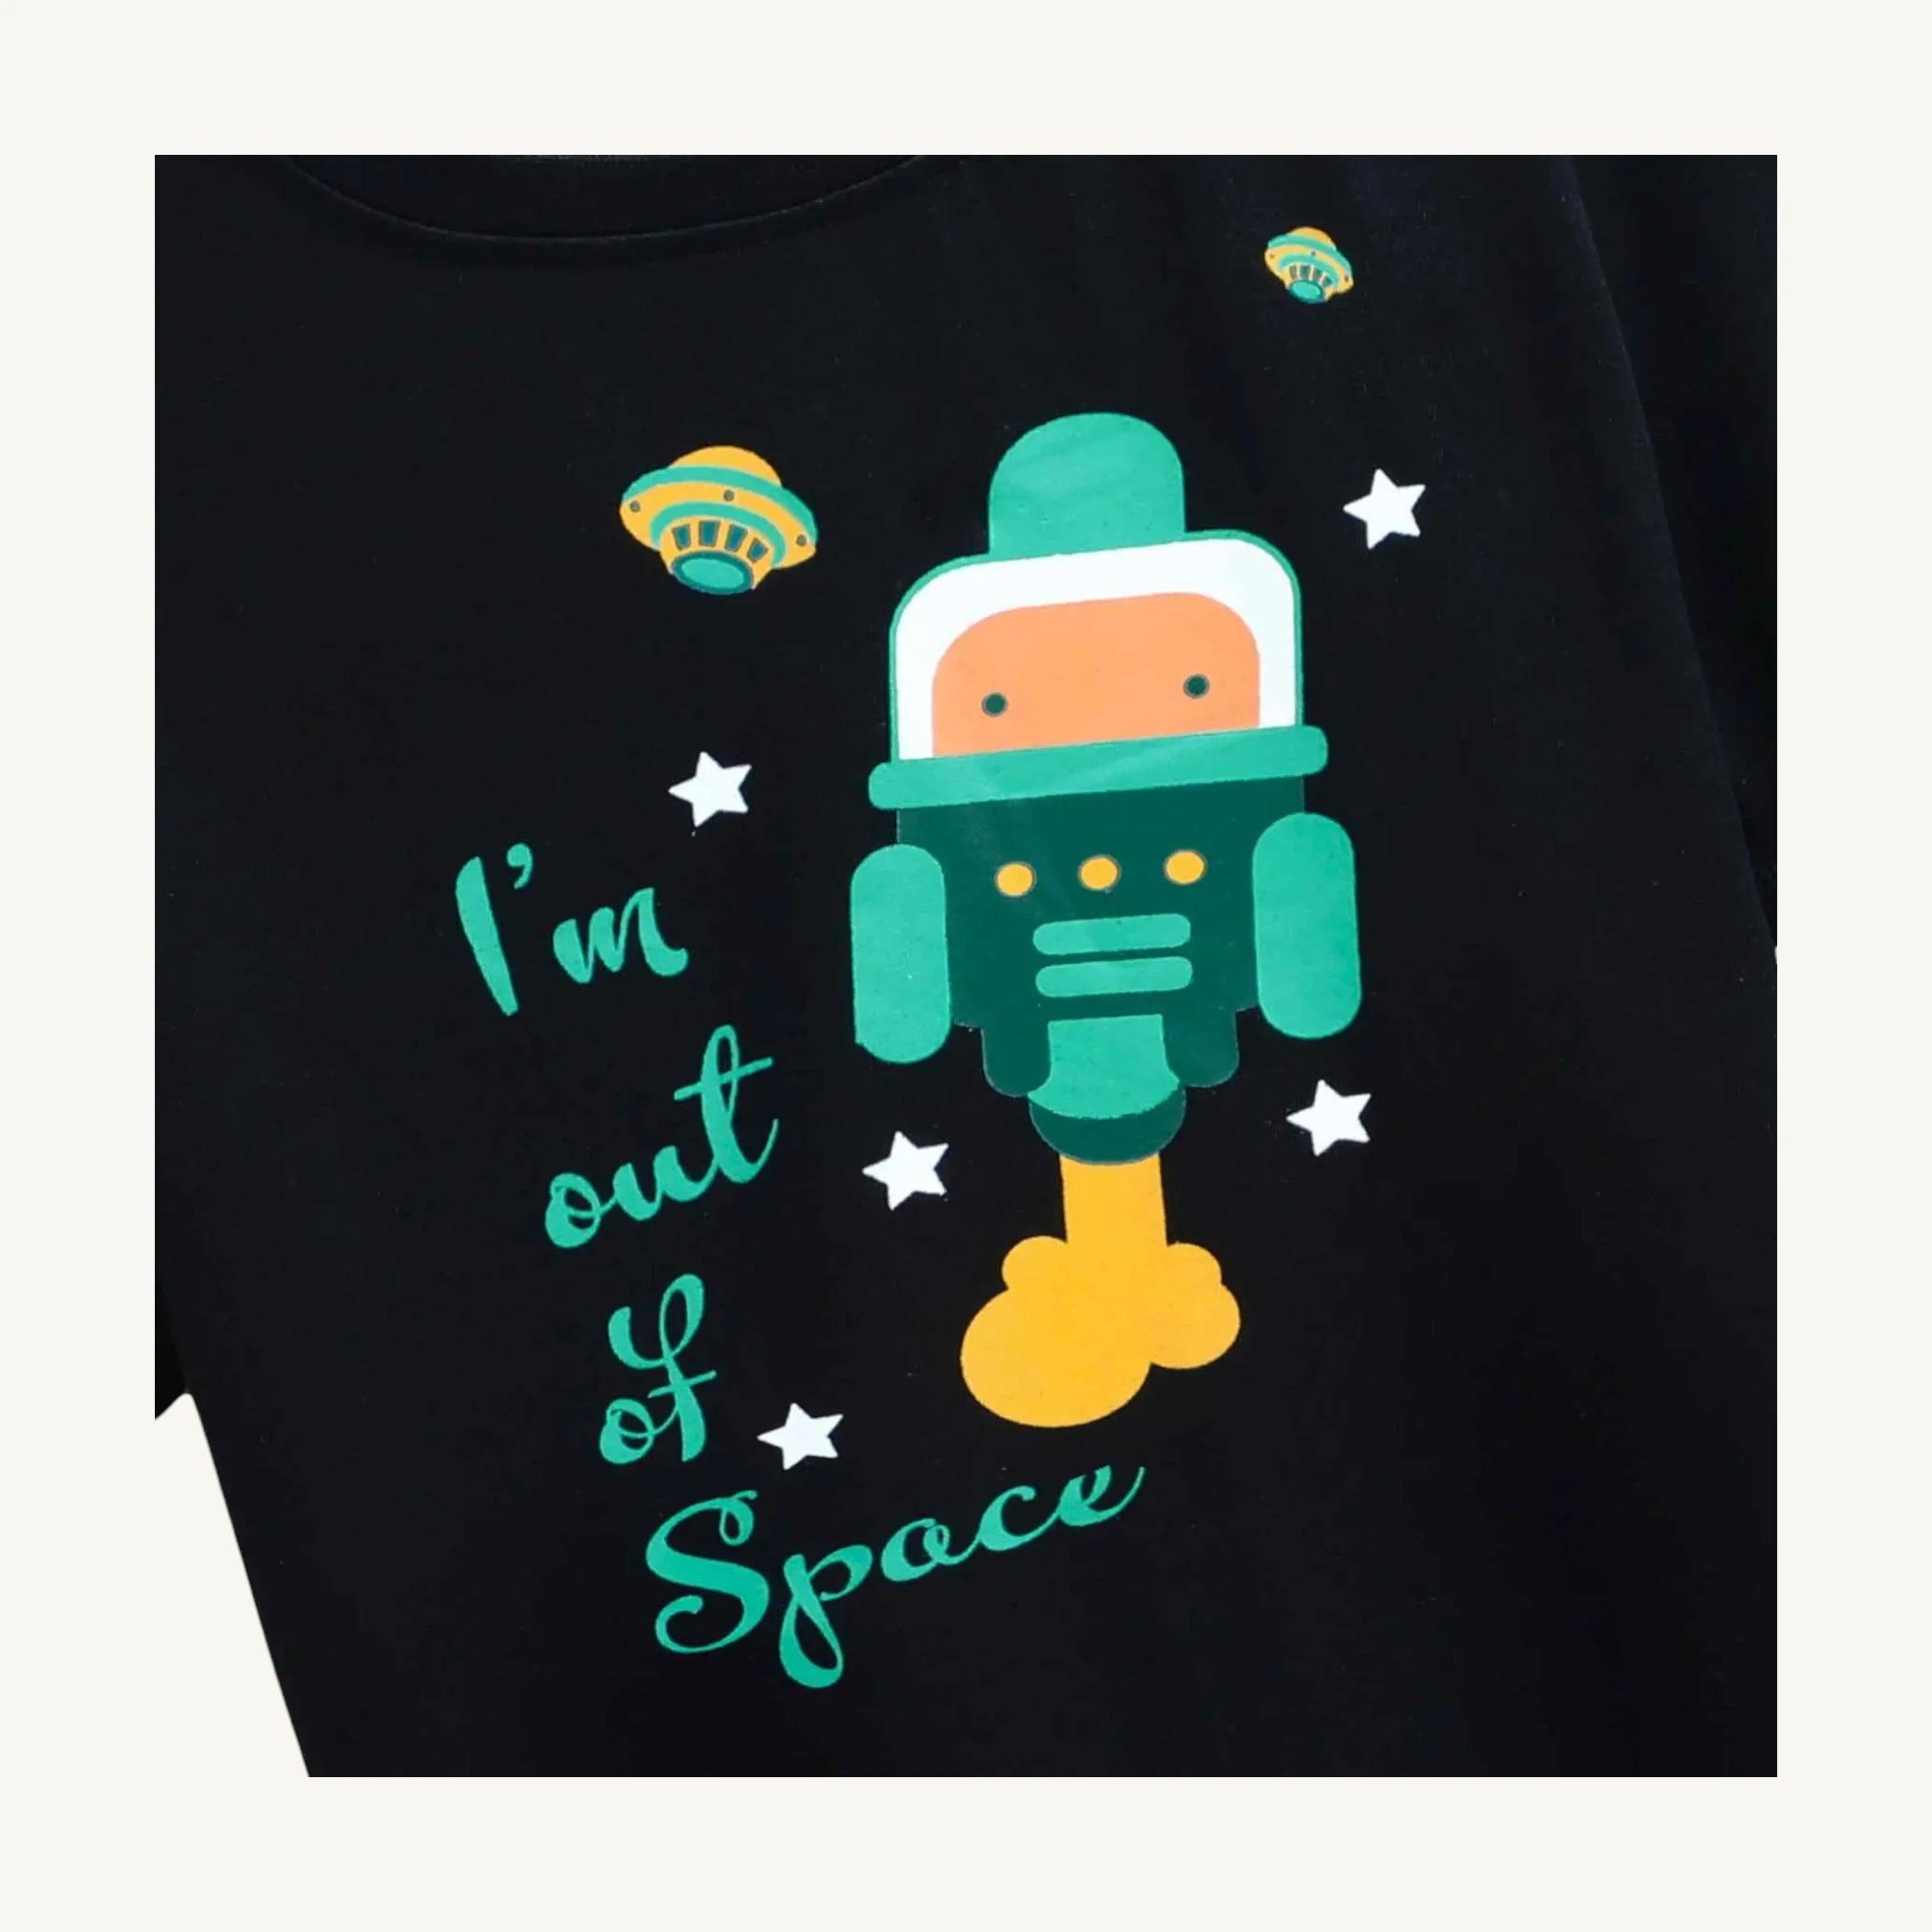 Kids Space Print T-shirt